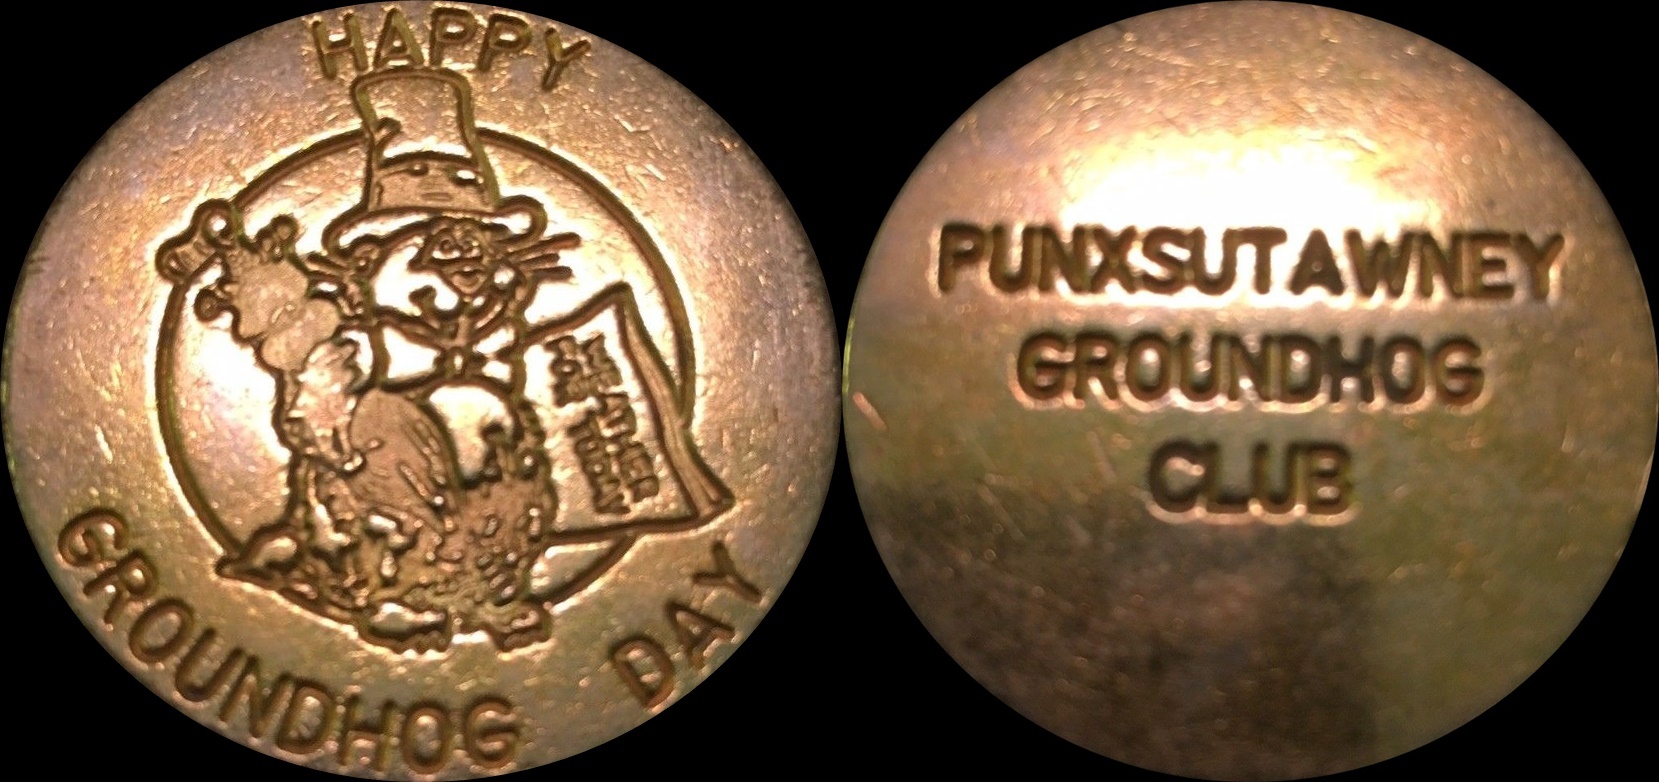 Punxsutawney Groundhog Club 1-horz.jpg